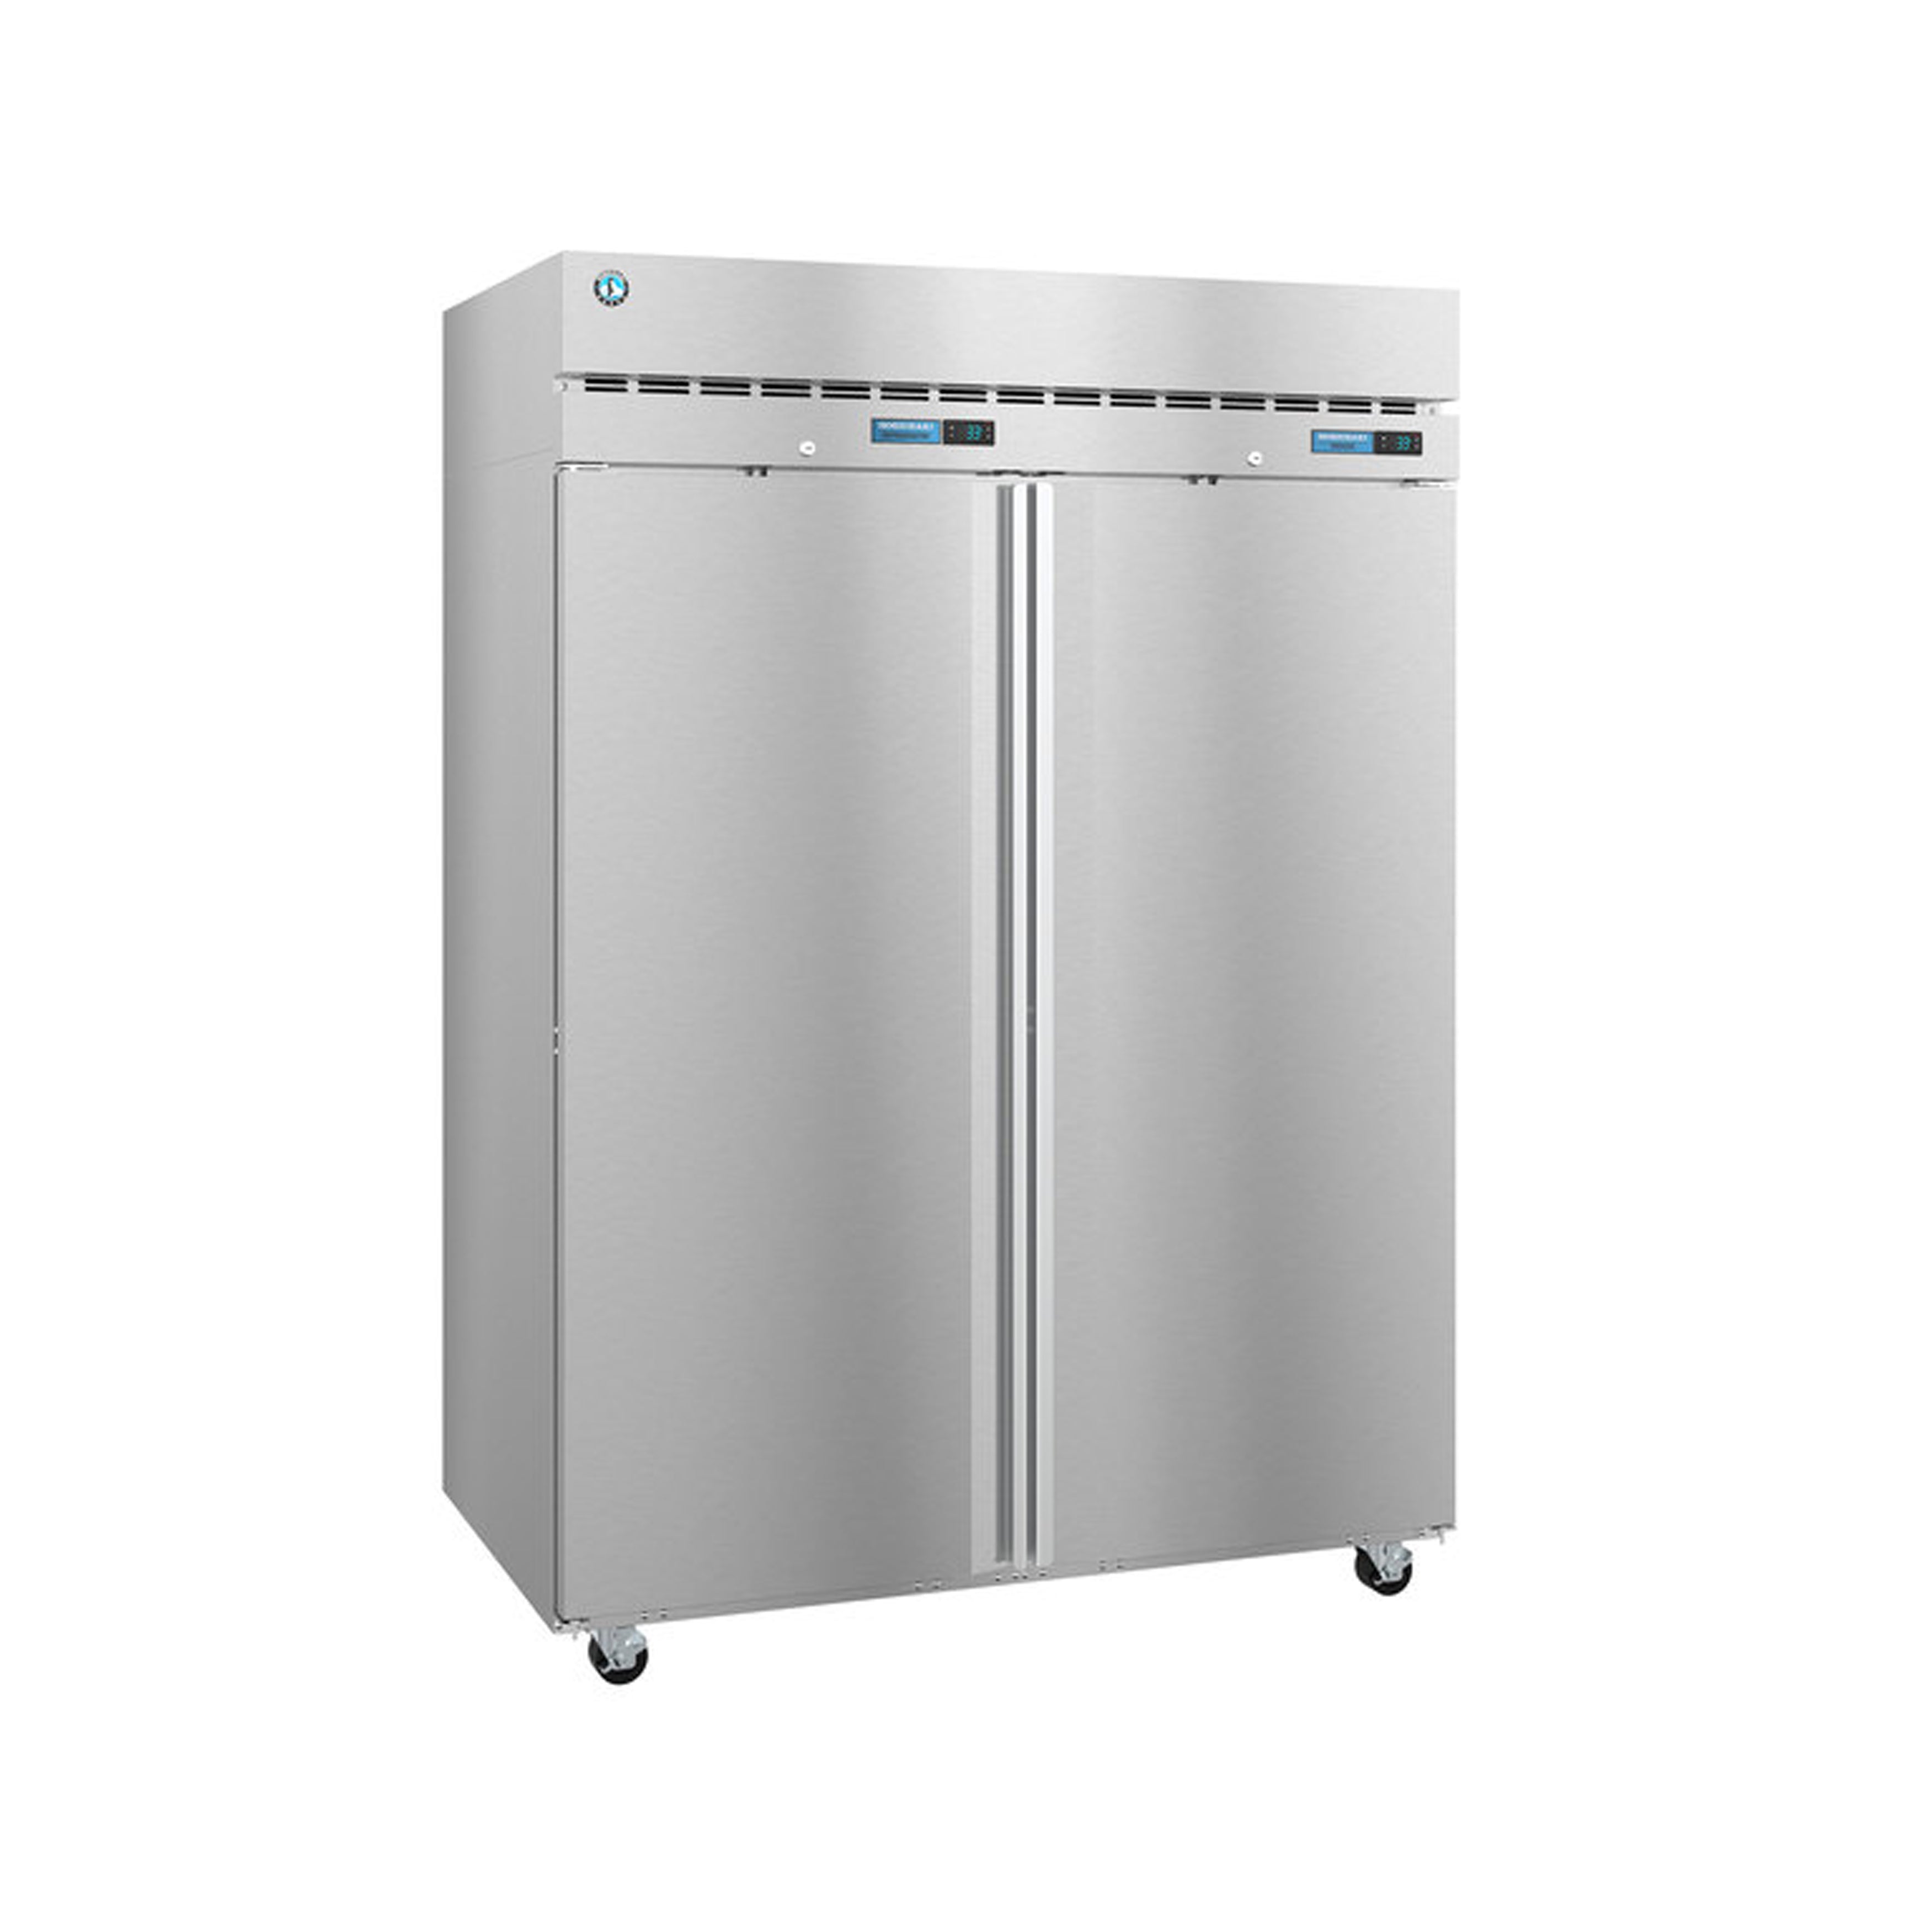 Hoshizaki - DT2A-FS, Commercial 55" Solid Door Dual Temperature Reach-In Refrigerator Freezer 56.2cu.ft.